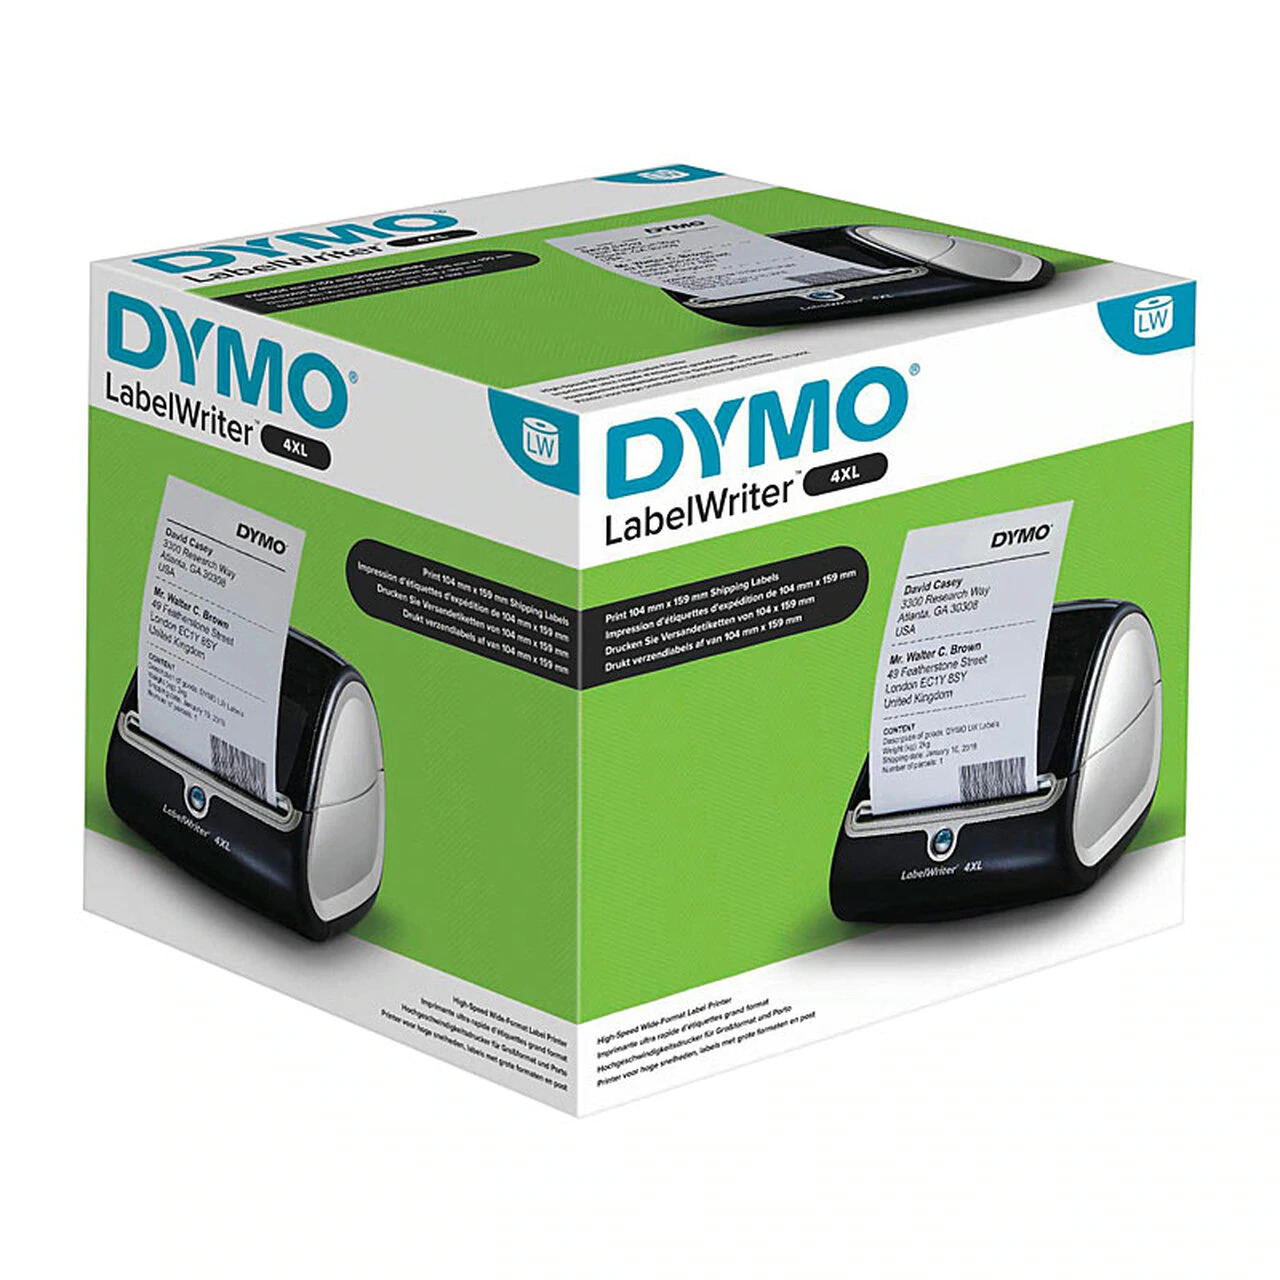 dymo labelwriter 4xl driver for mac